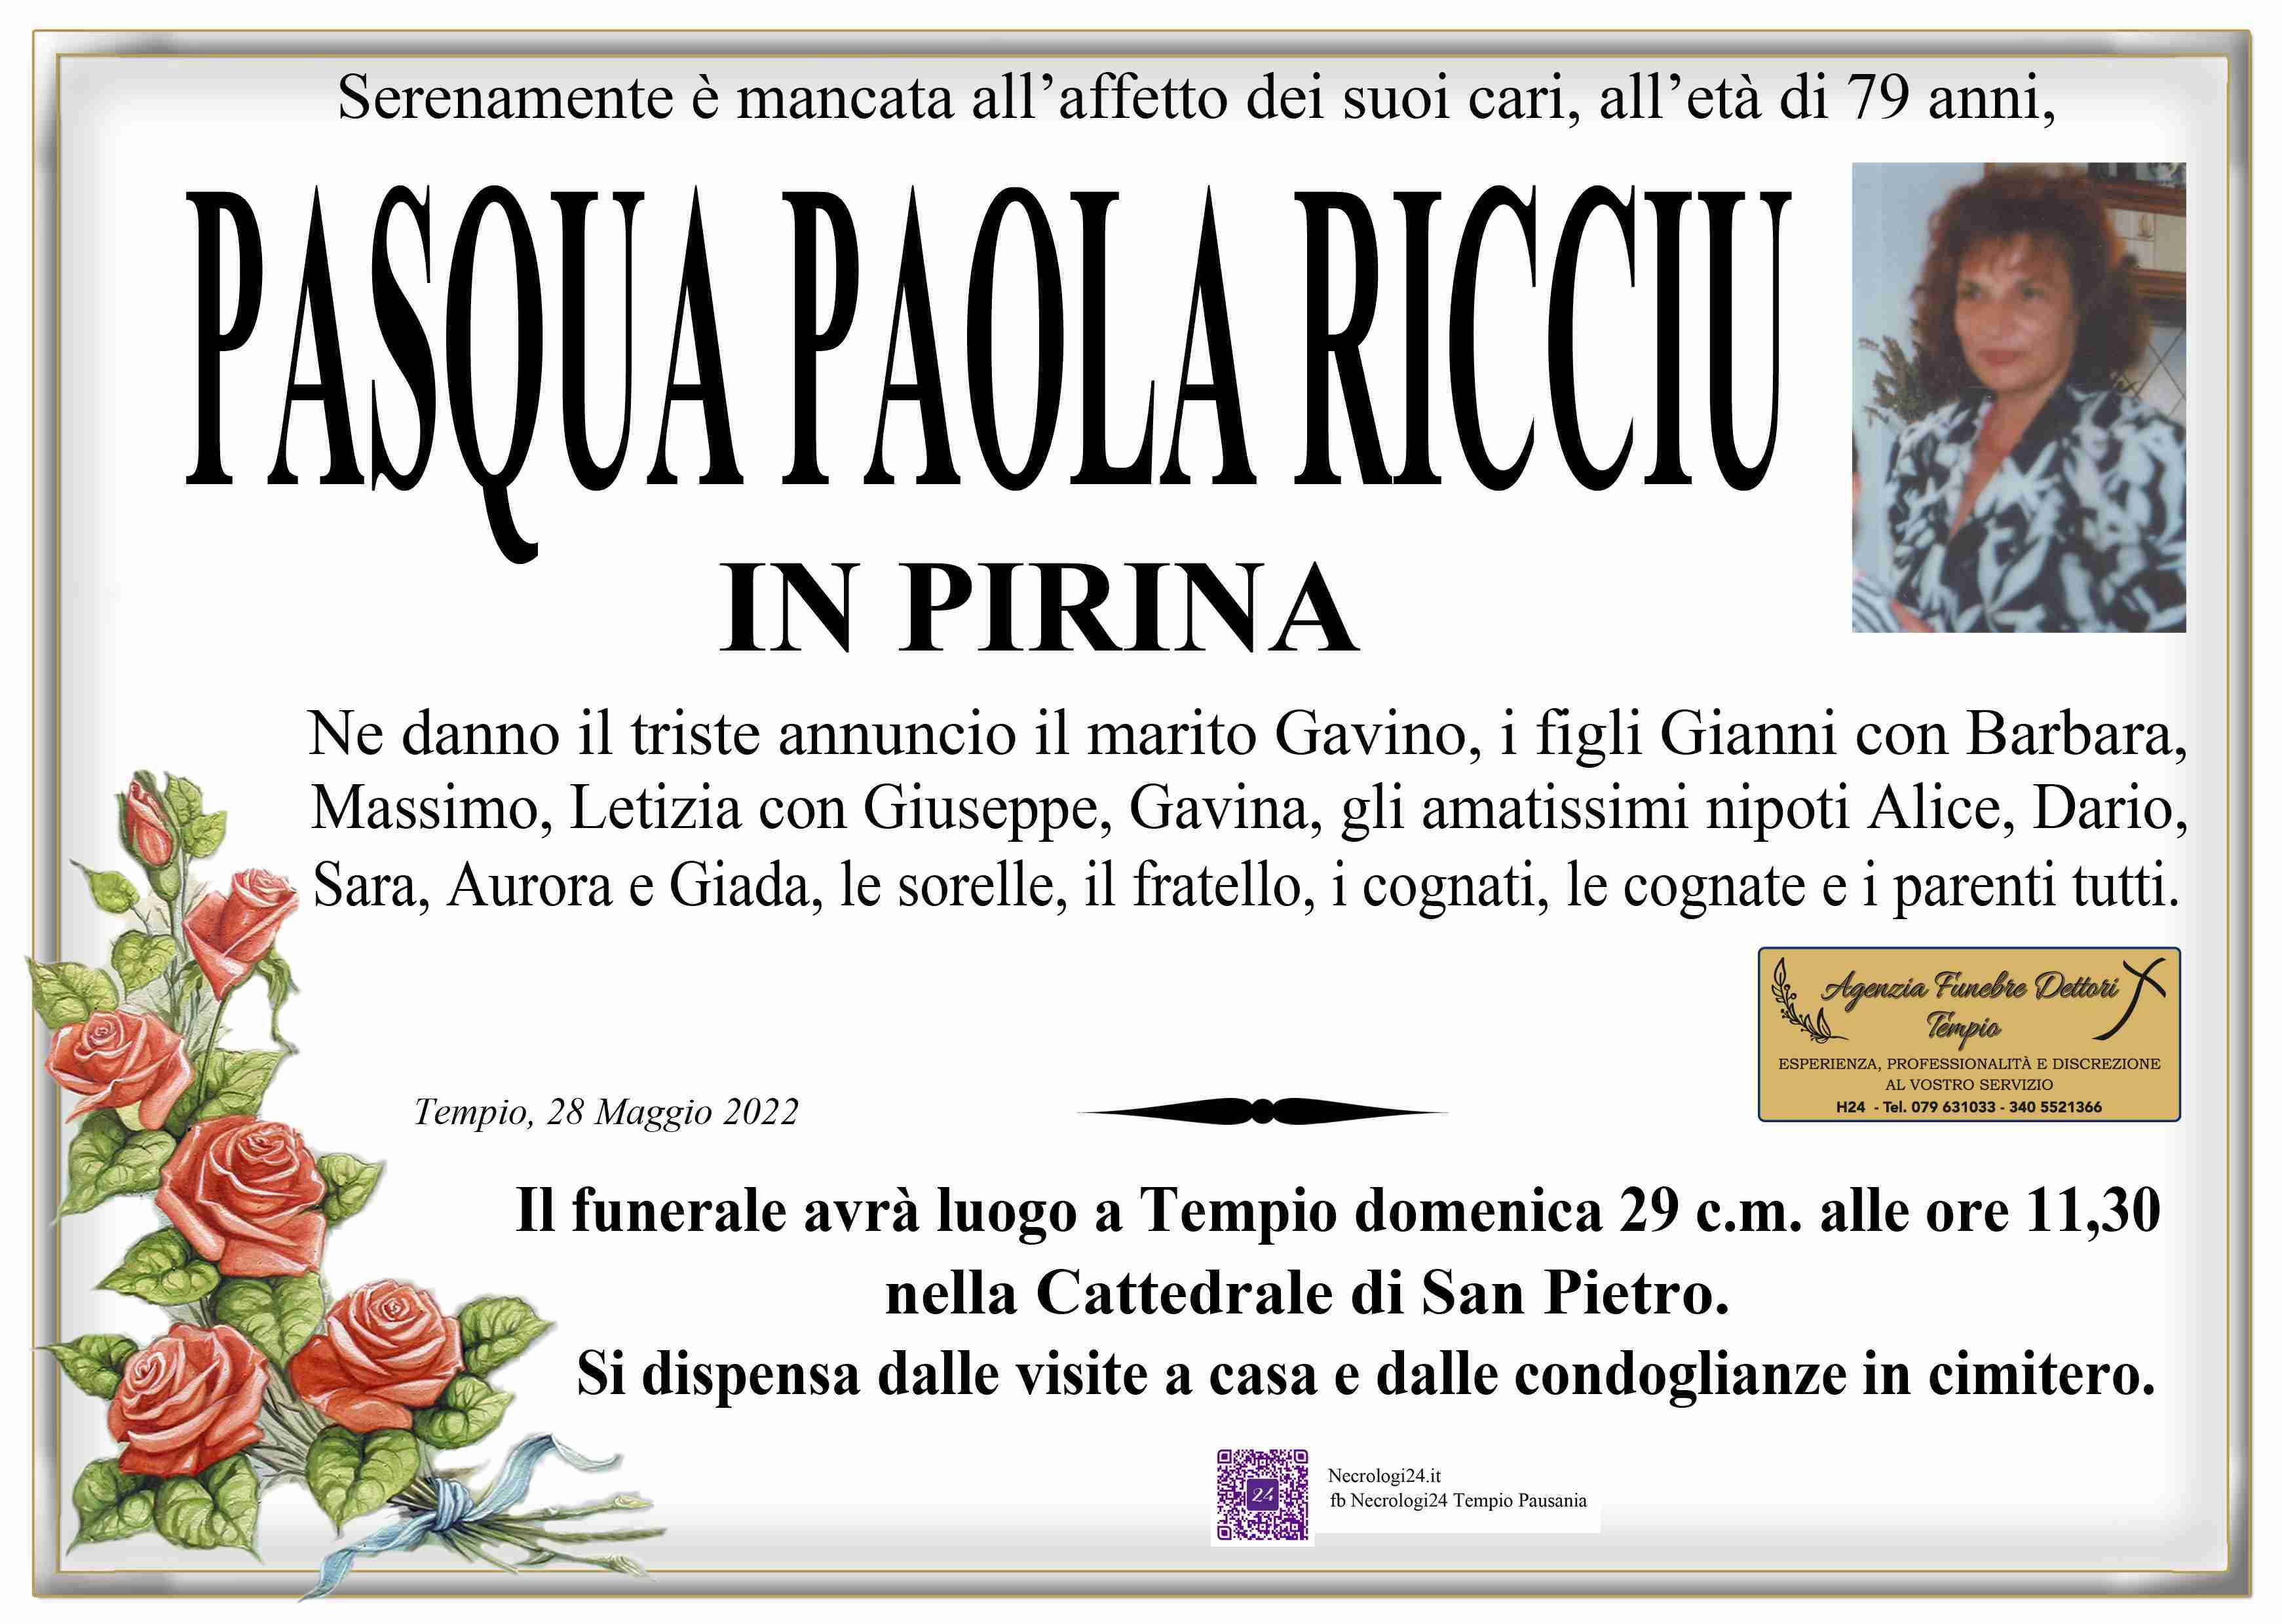 Pasqua Paola Ricciu